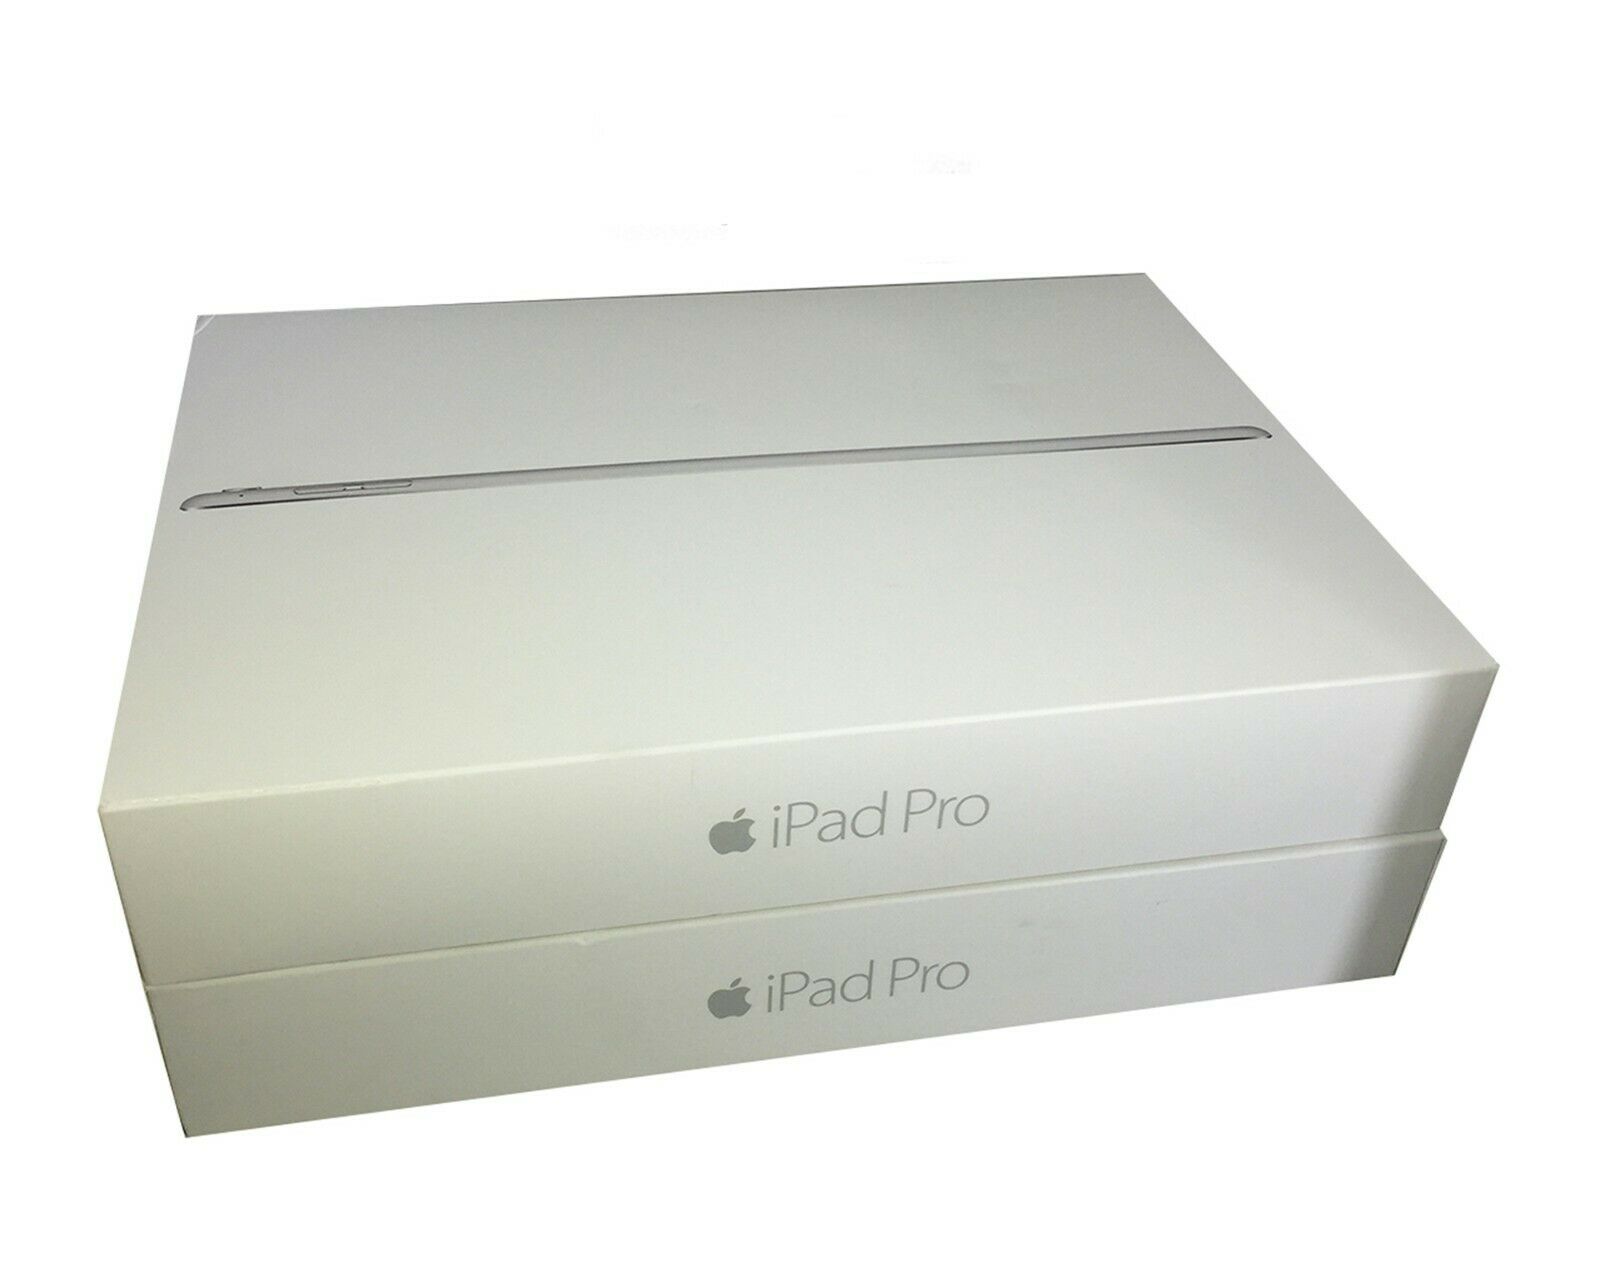 Bundle - Apple iPad Pro, 128GB, Space Gray, Wi-Fi Only, 12.9-inch, Original Box